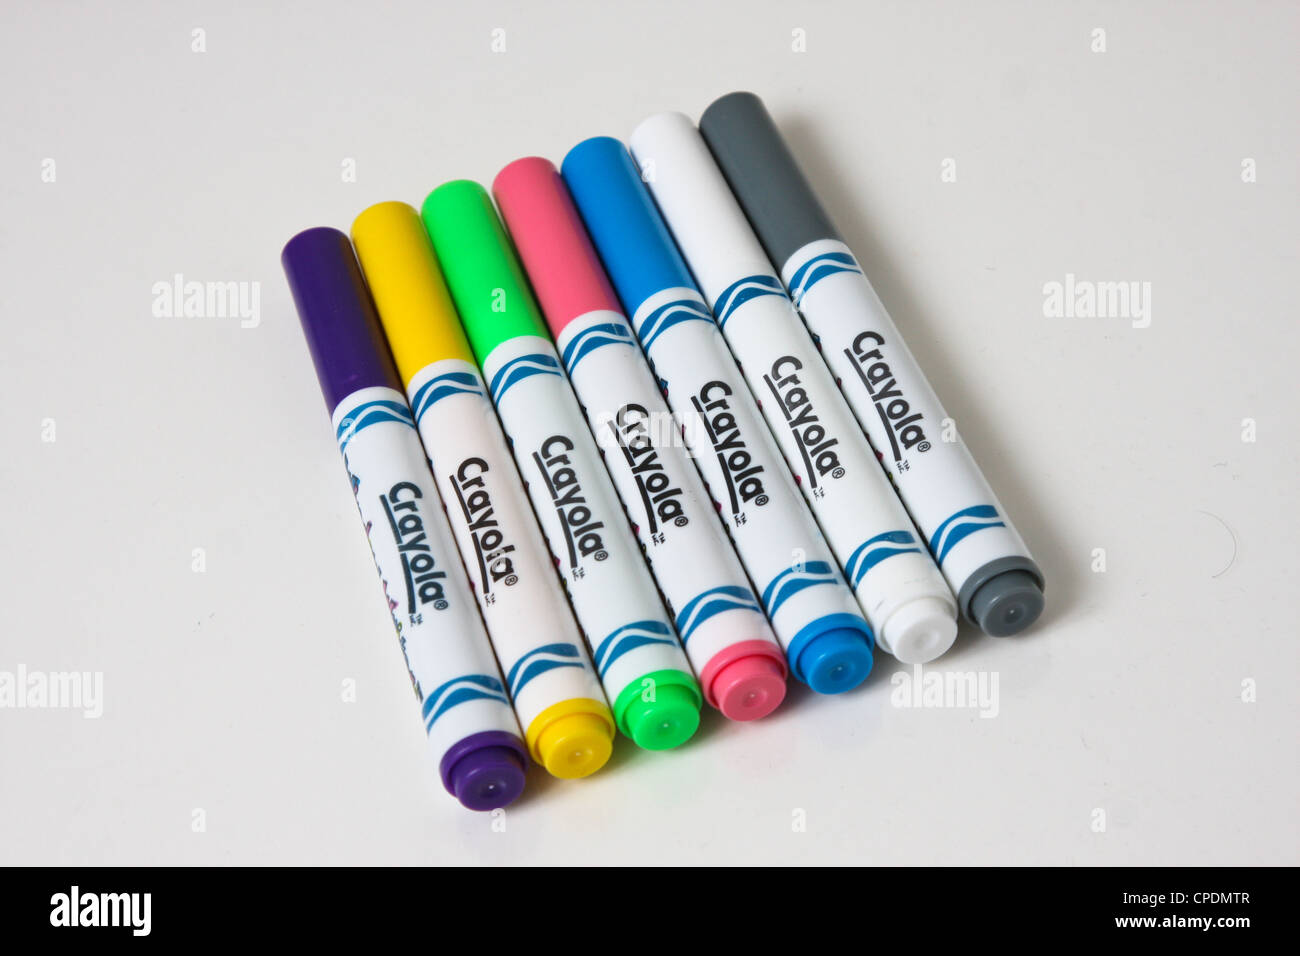 Crayola Marker 